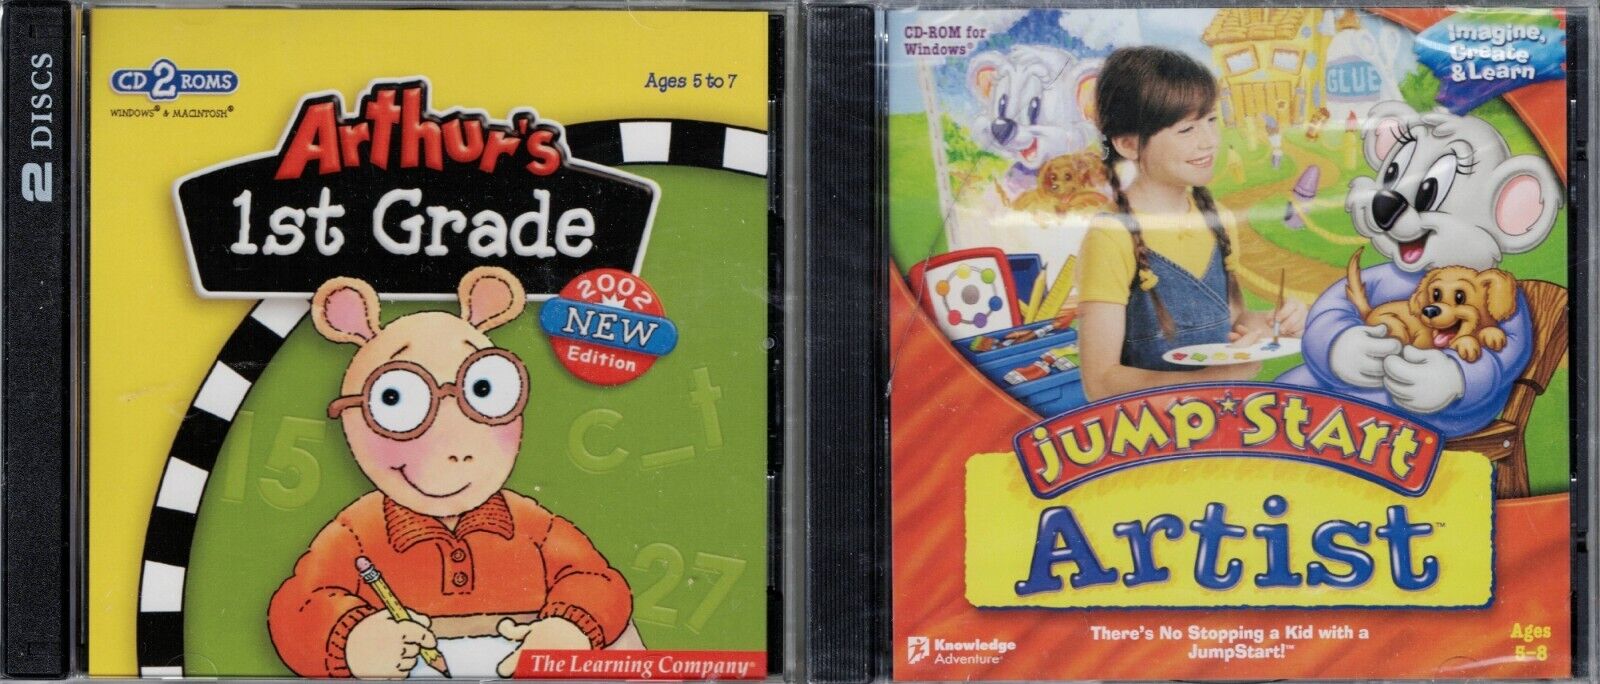 Arthurs 1st Grade & JumpStart Artist Pc Both New XP 2 Great Learning Titles